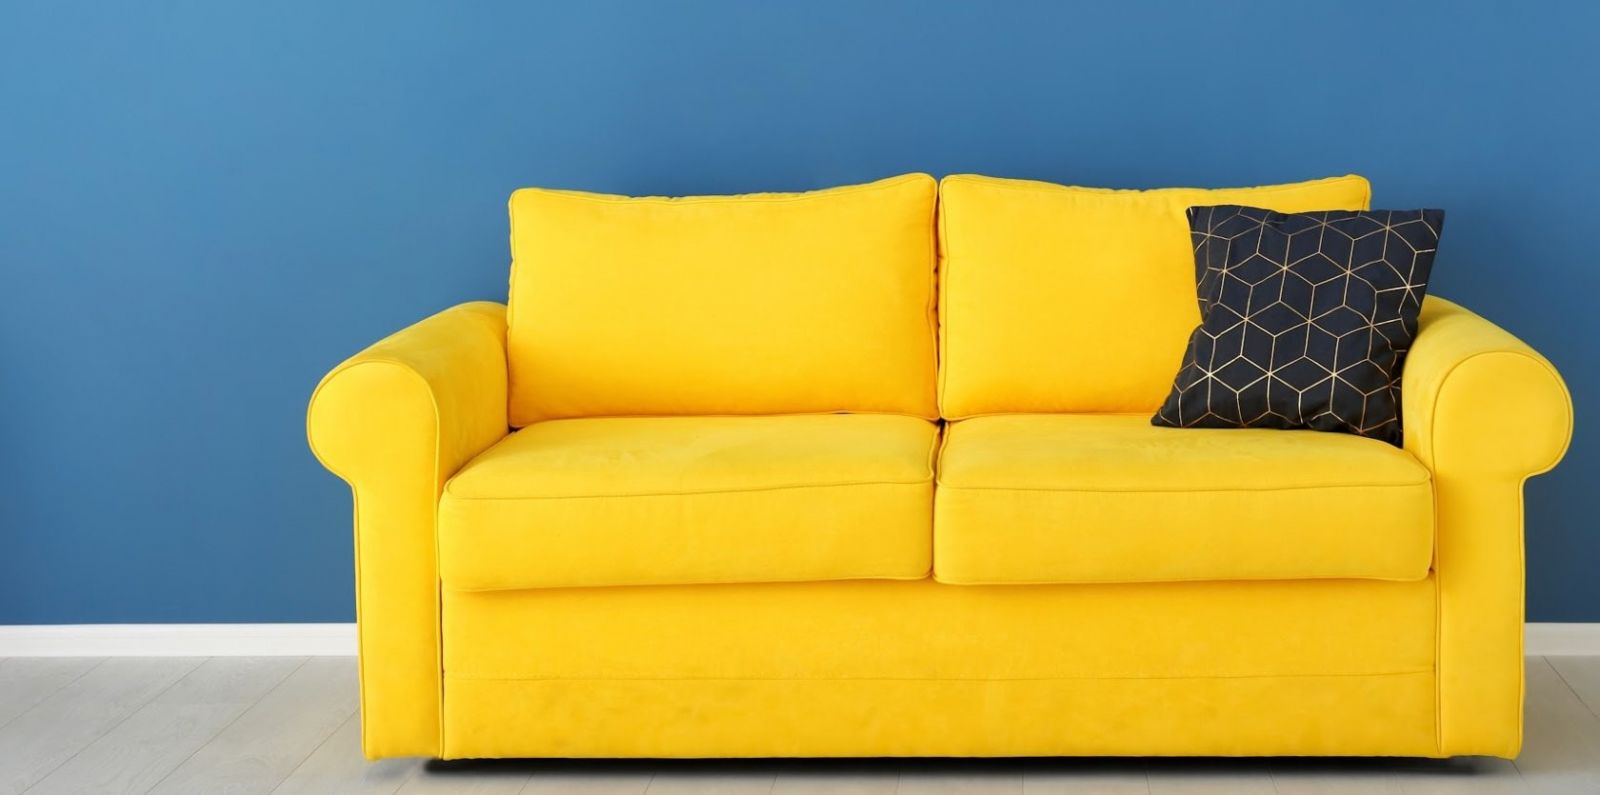 желтый диван на синей стене